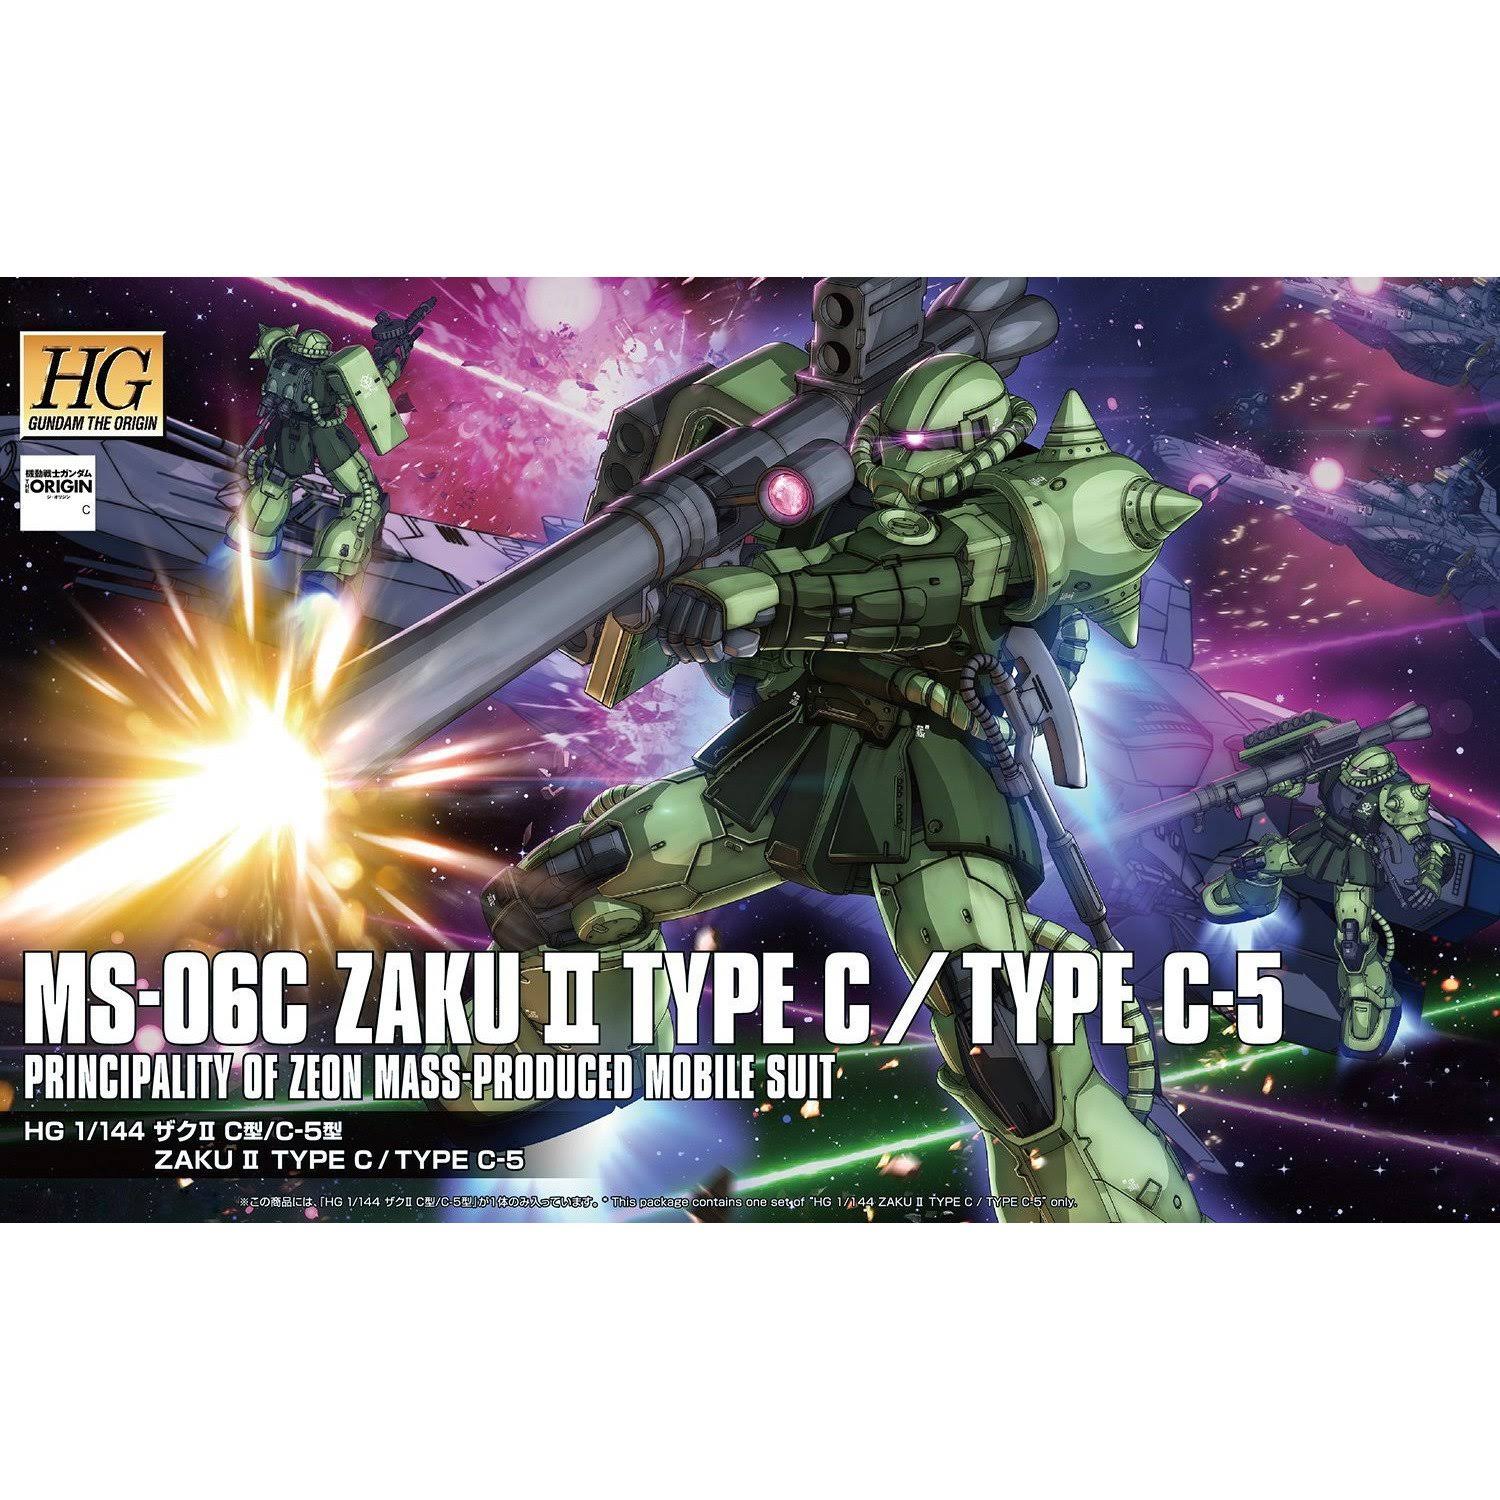 Bandai Gundam the Origin 016 MS-06C Zaku Ii Model Kit - Type C/C-5, 1/144 Scale